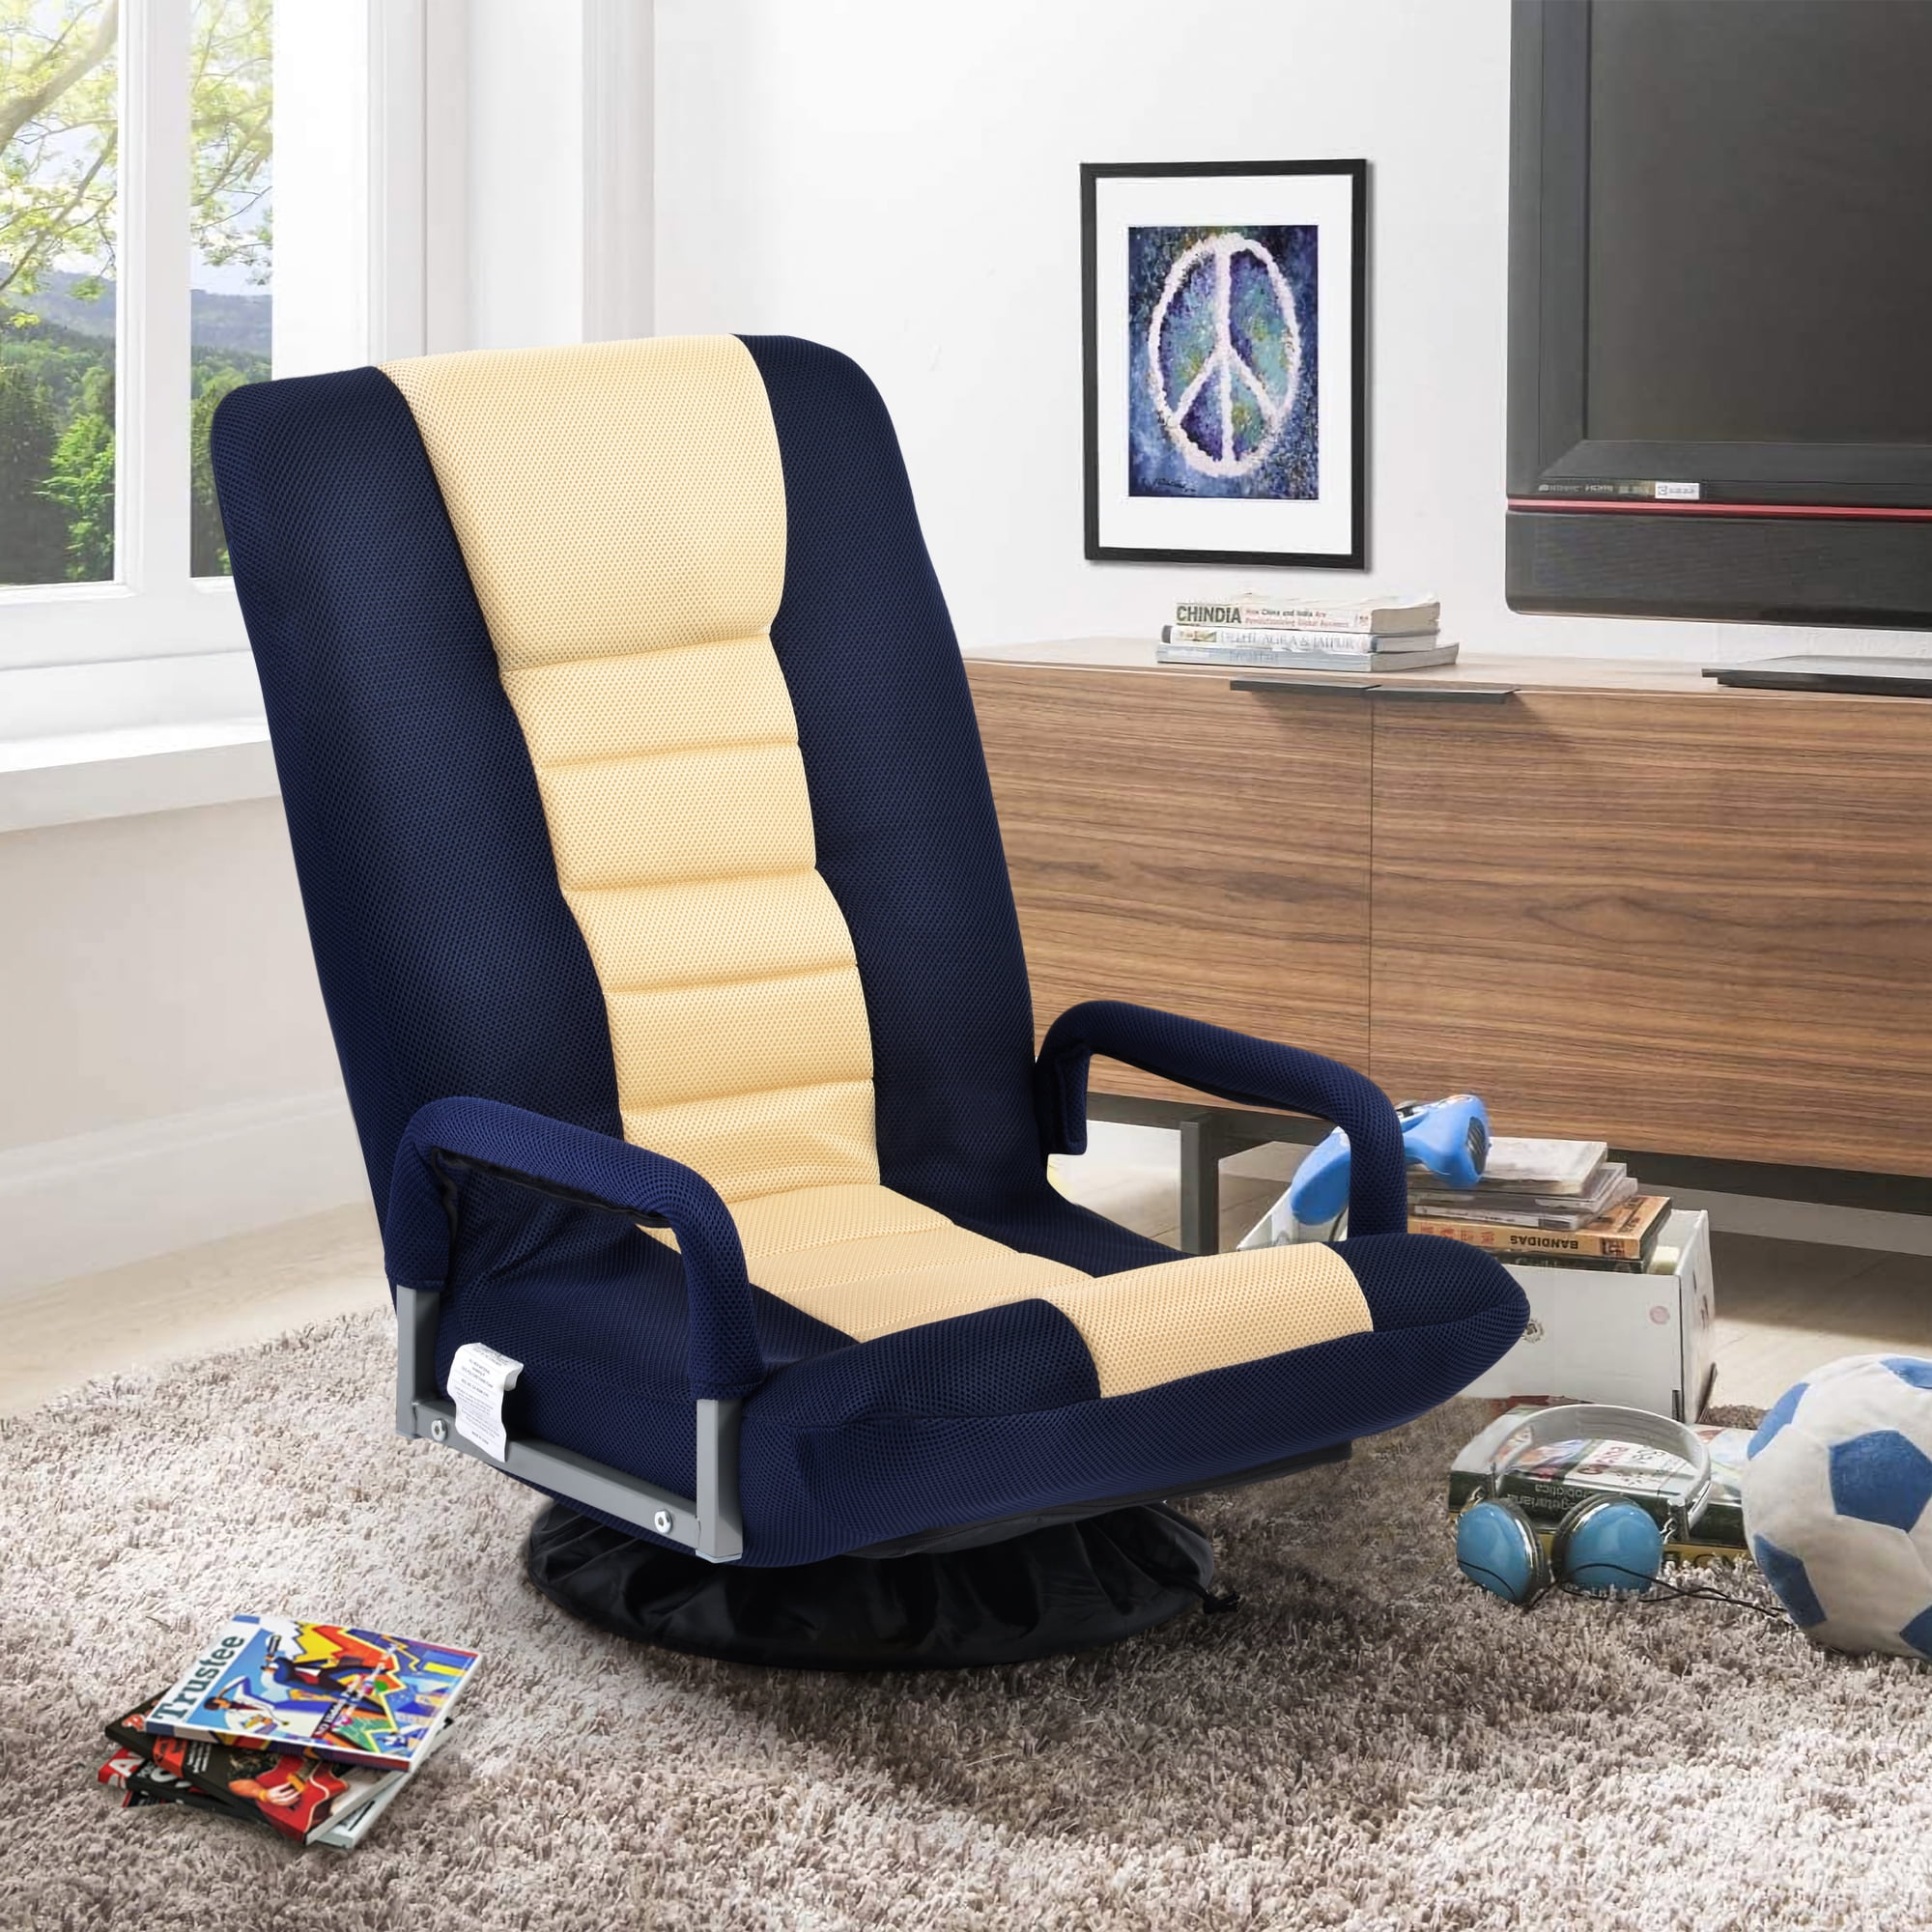 MERITLINE Swivel Video Rocker Gaming Chair Adjustable 7-Position Floor Chair Folding Sofa Lounger Blue+Beige 